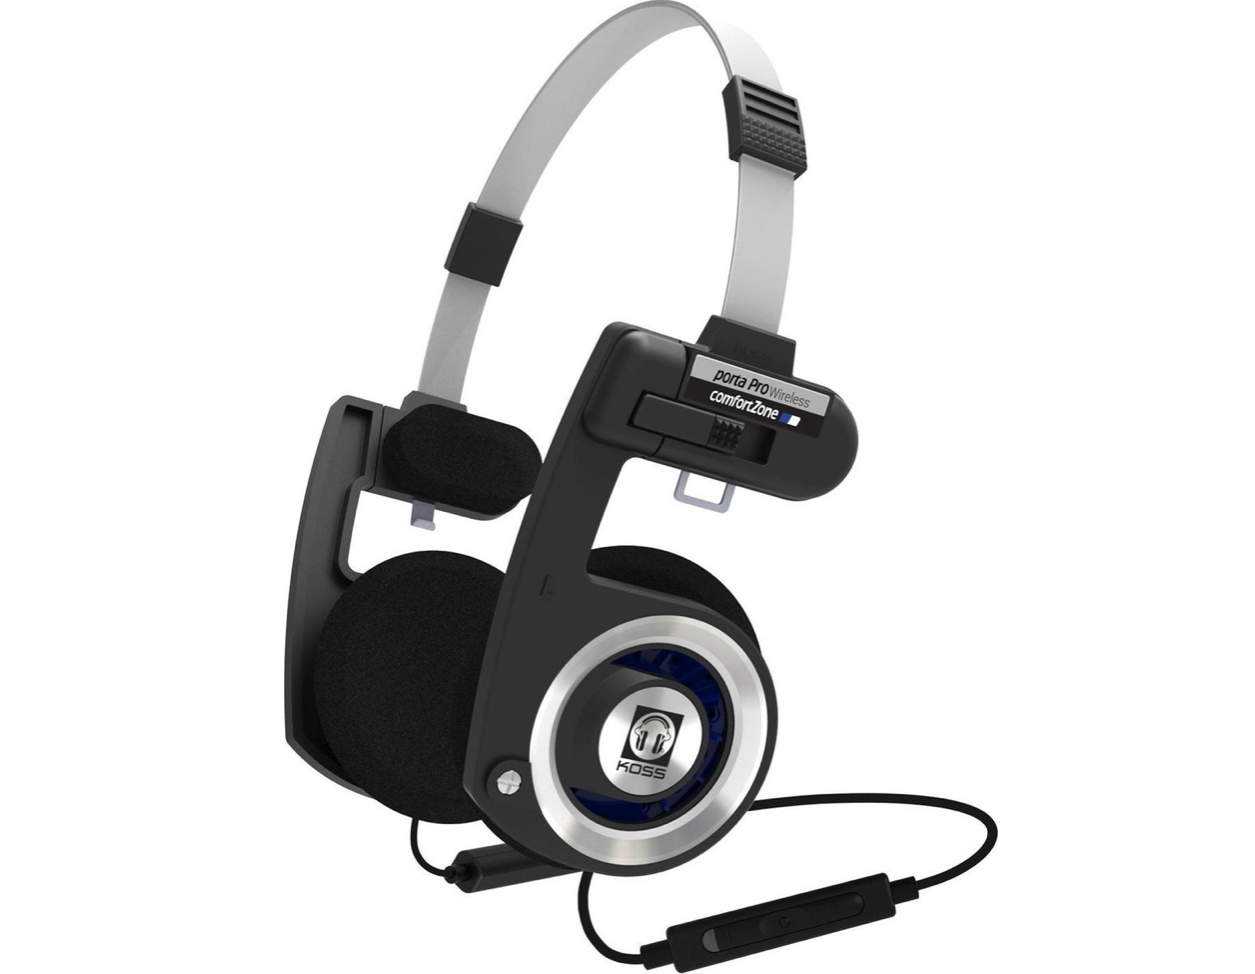 Koss Porta Pro - Bluetooth Wireless On-Ear Headphones with Headband - Black